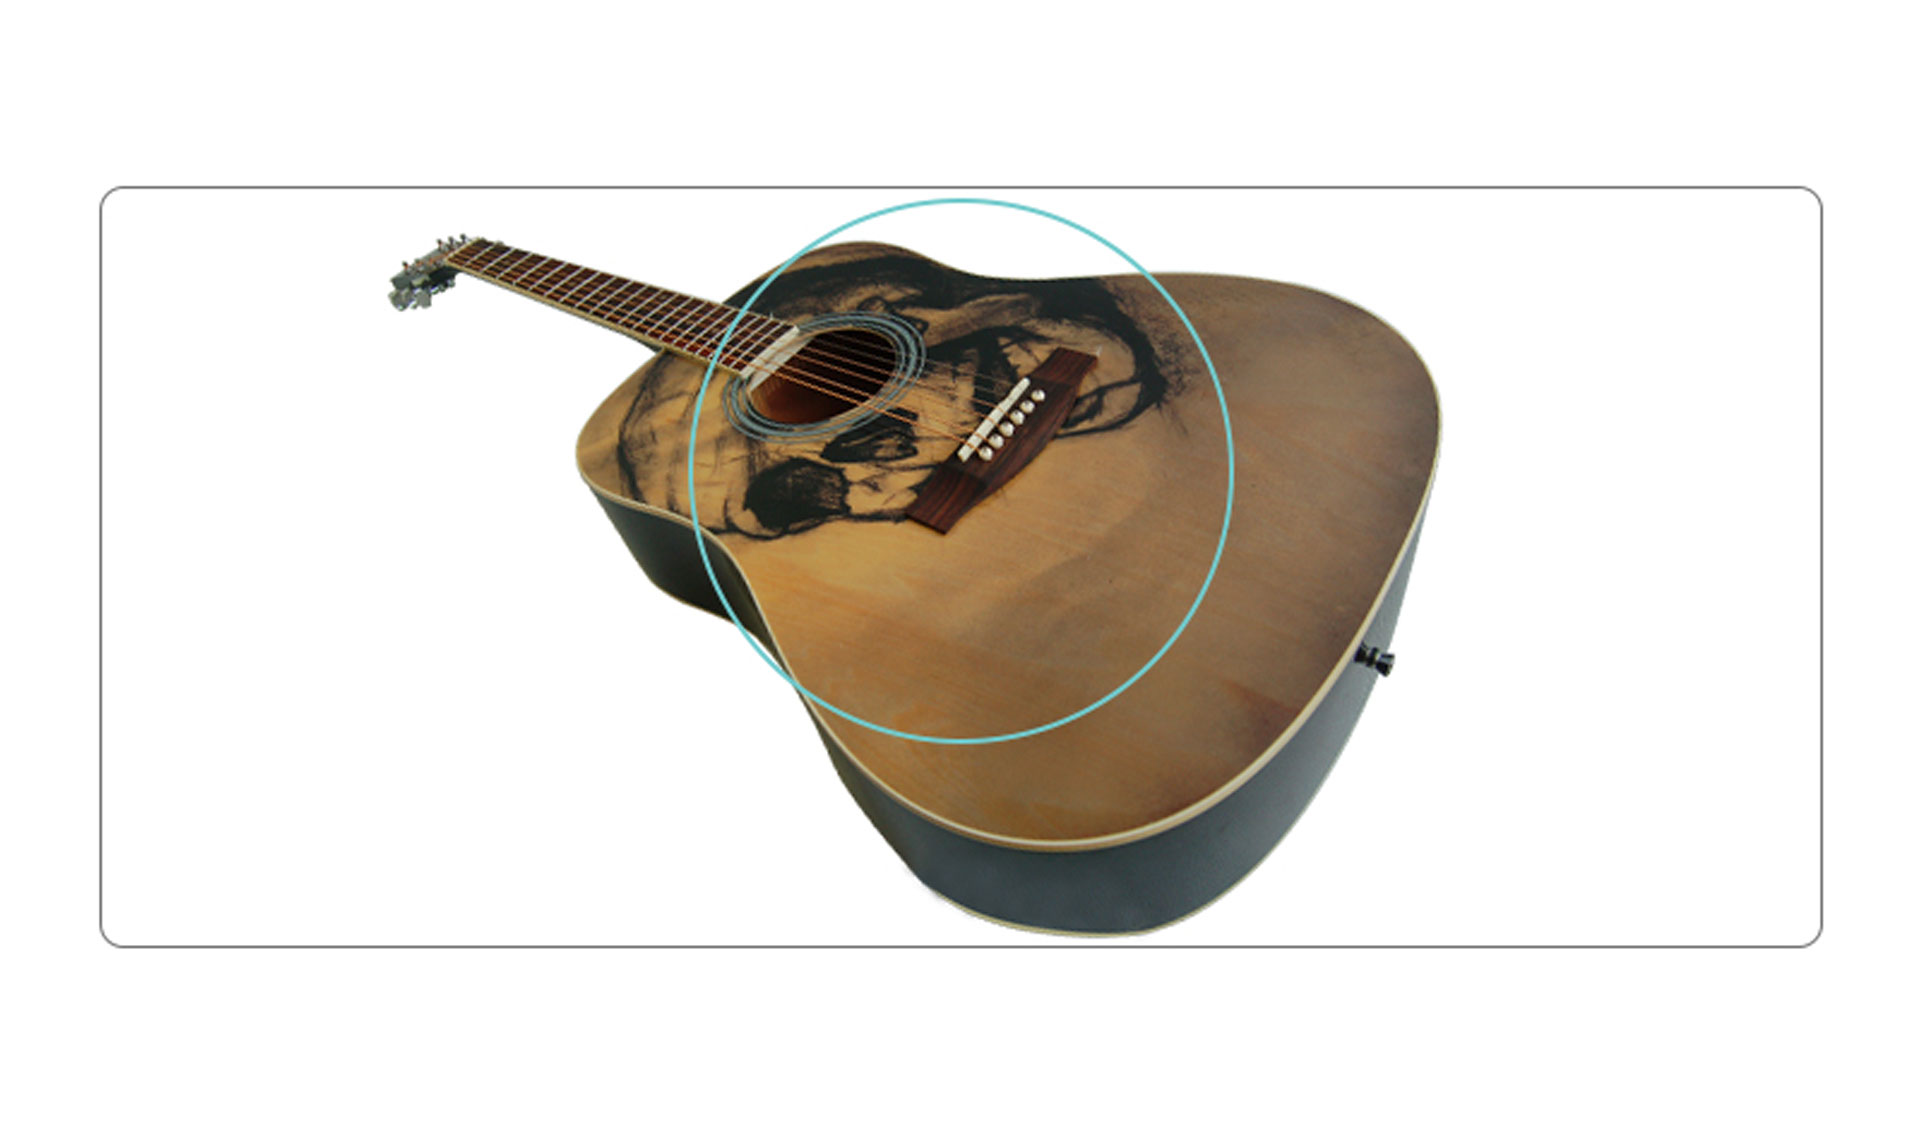 Guitar Instrument